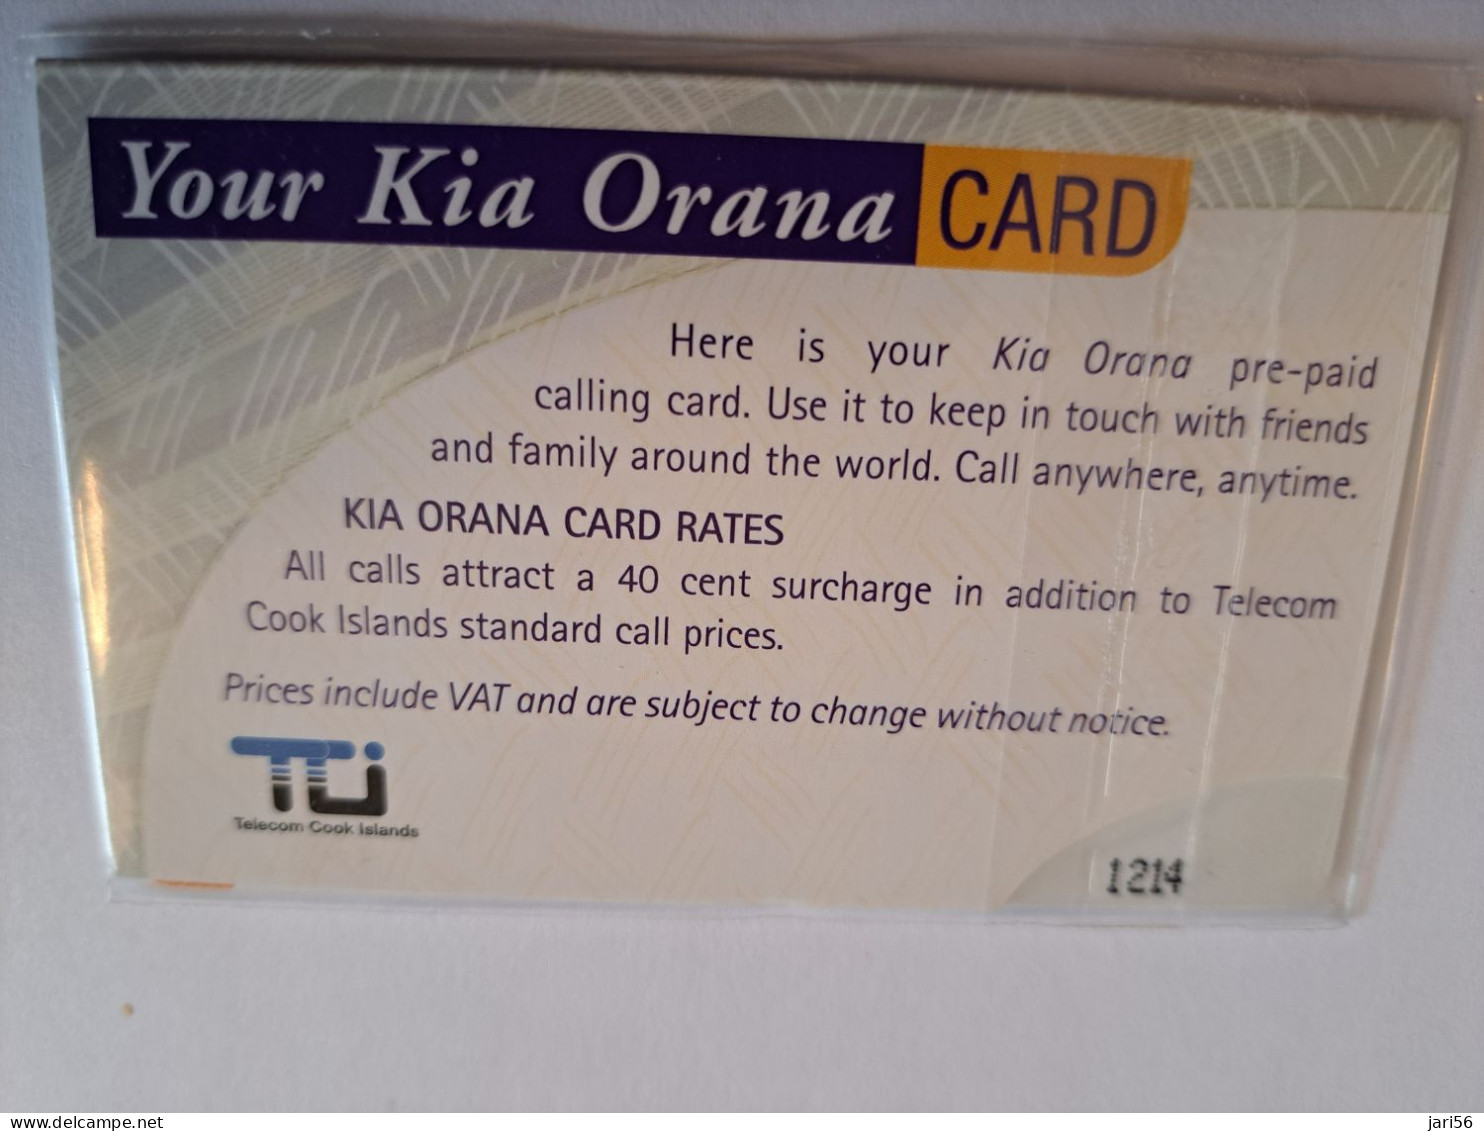 COOK ISLANDS / PREPAID CARD/  $10,-/ KIA ORANA CARD /TELECOM COOK ISLANDS/ HIBISCUS FLOWER/ MINT IN WRAPPER   ** 16569** - Isole Cook